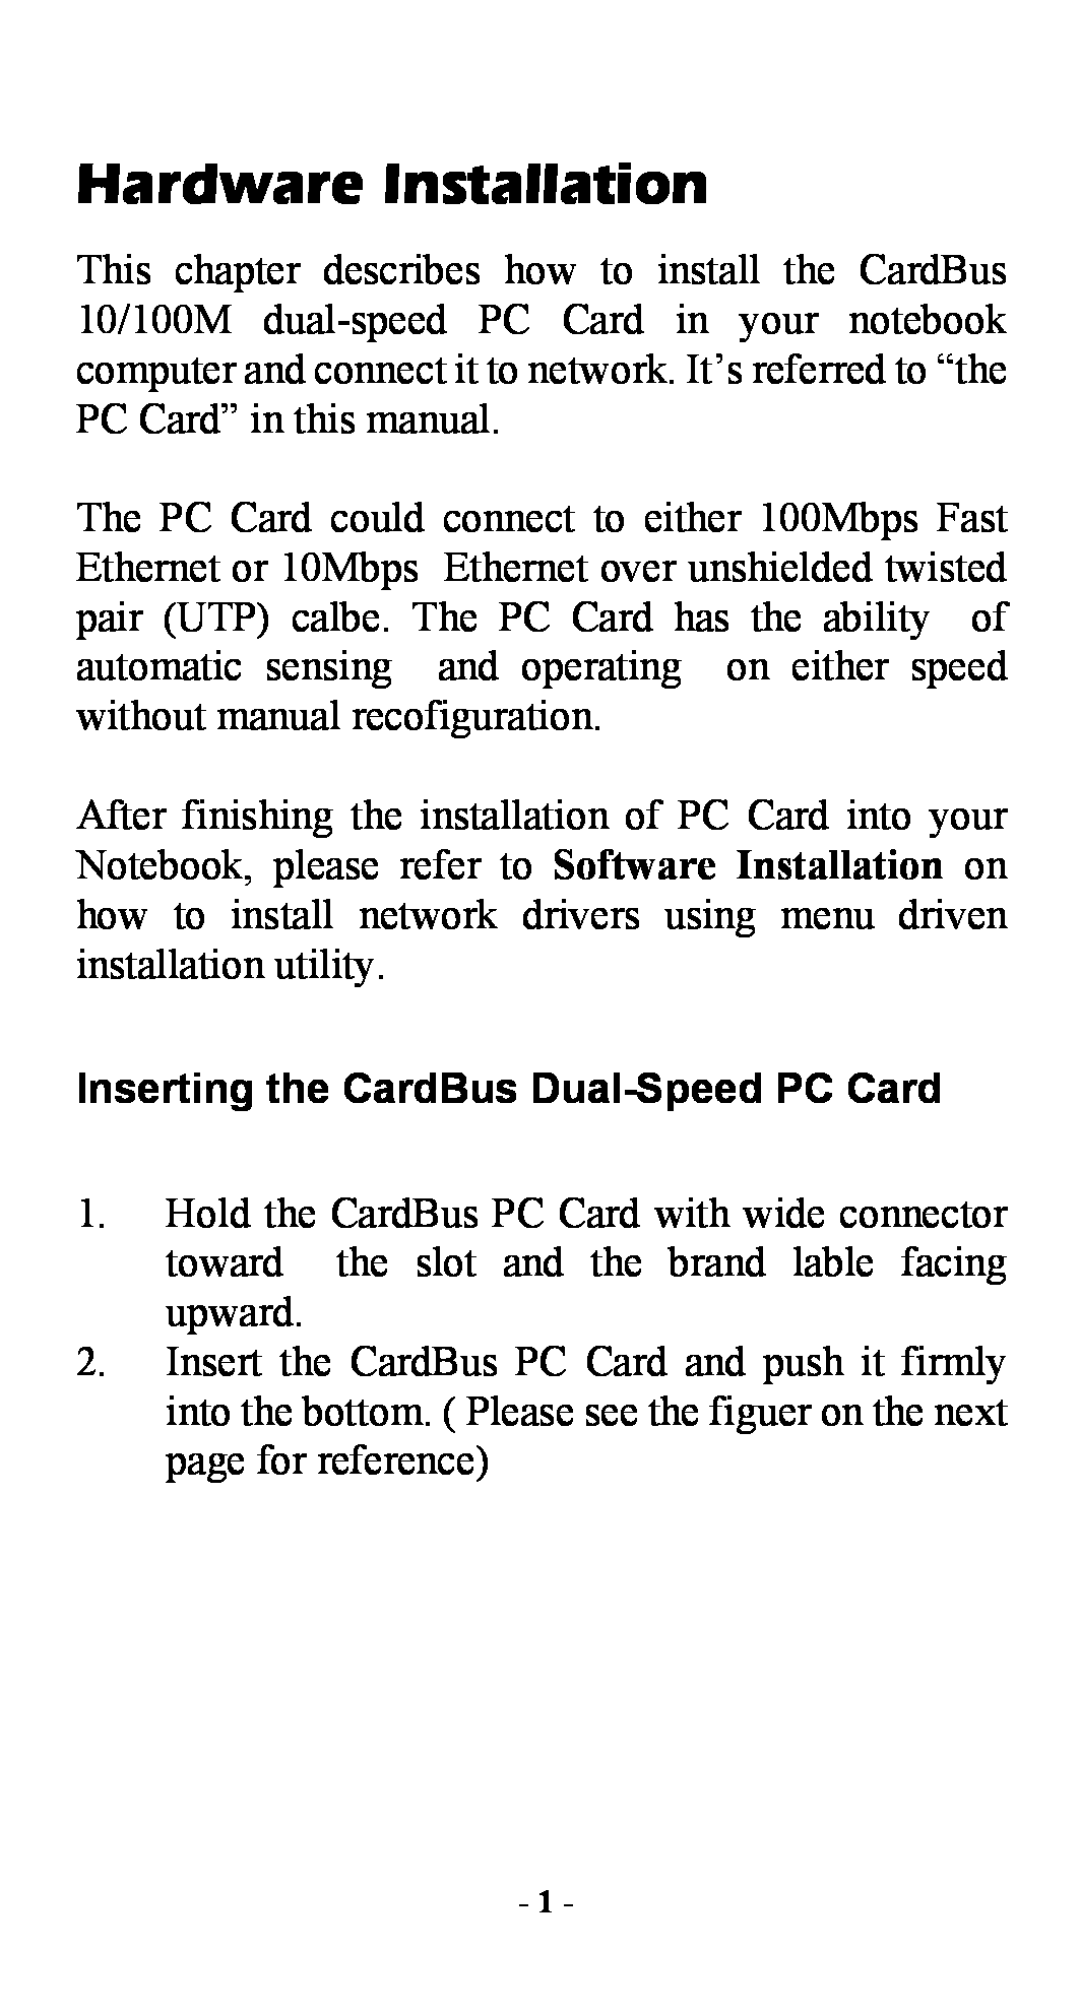 Abocom FE2000 manual Hardware Installation, Inserting the CardBus Dual-Speed PC Card 